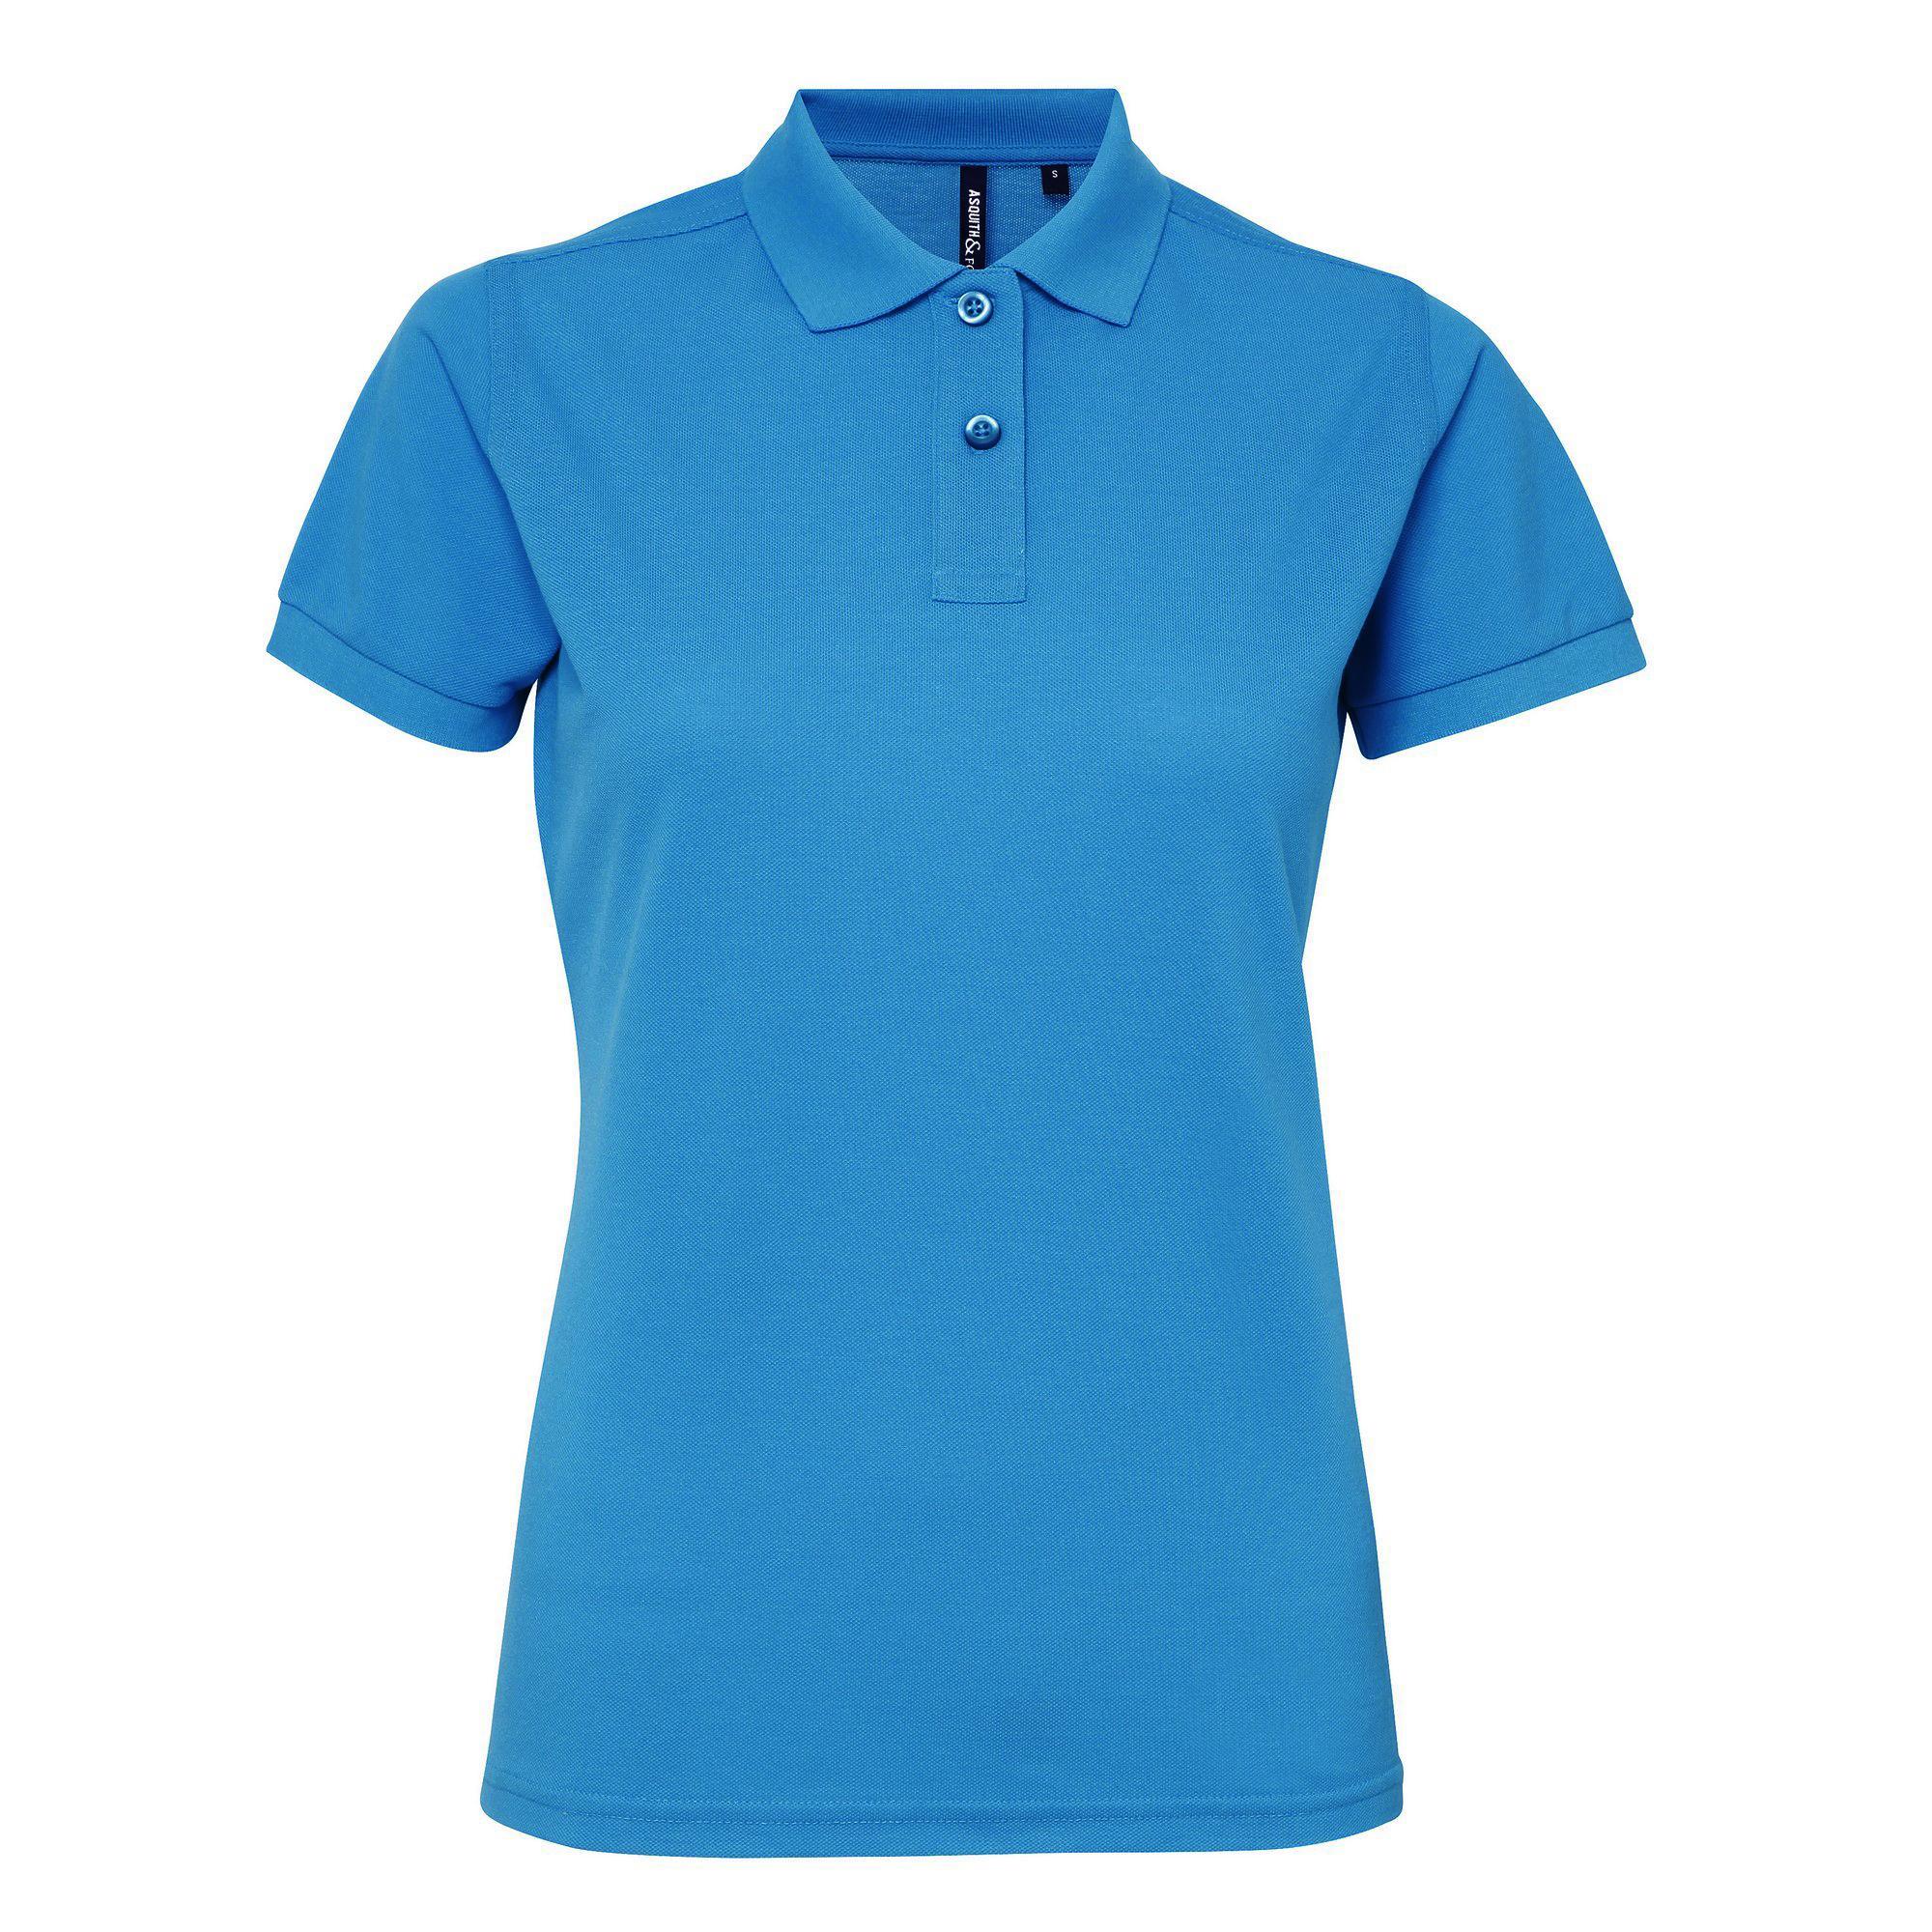 Asquith & Fox Womens/Ladies Short Sleeve Performance Blend Polo Shirt (Sapphire) (S)